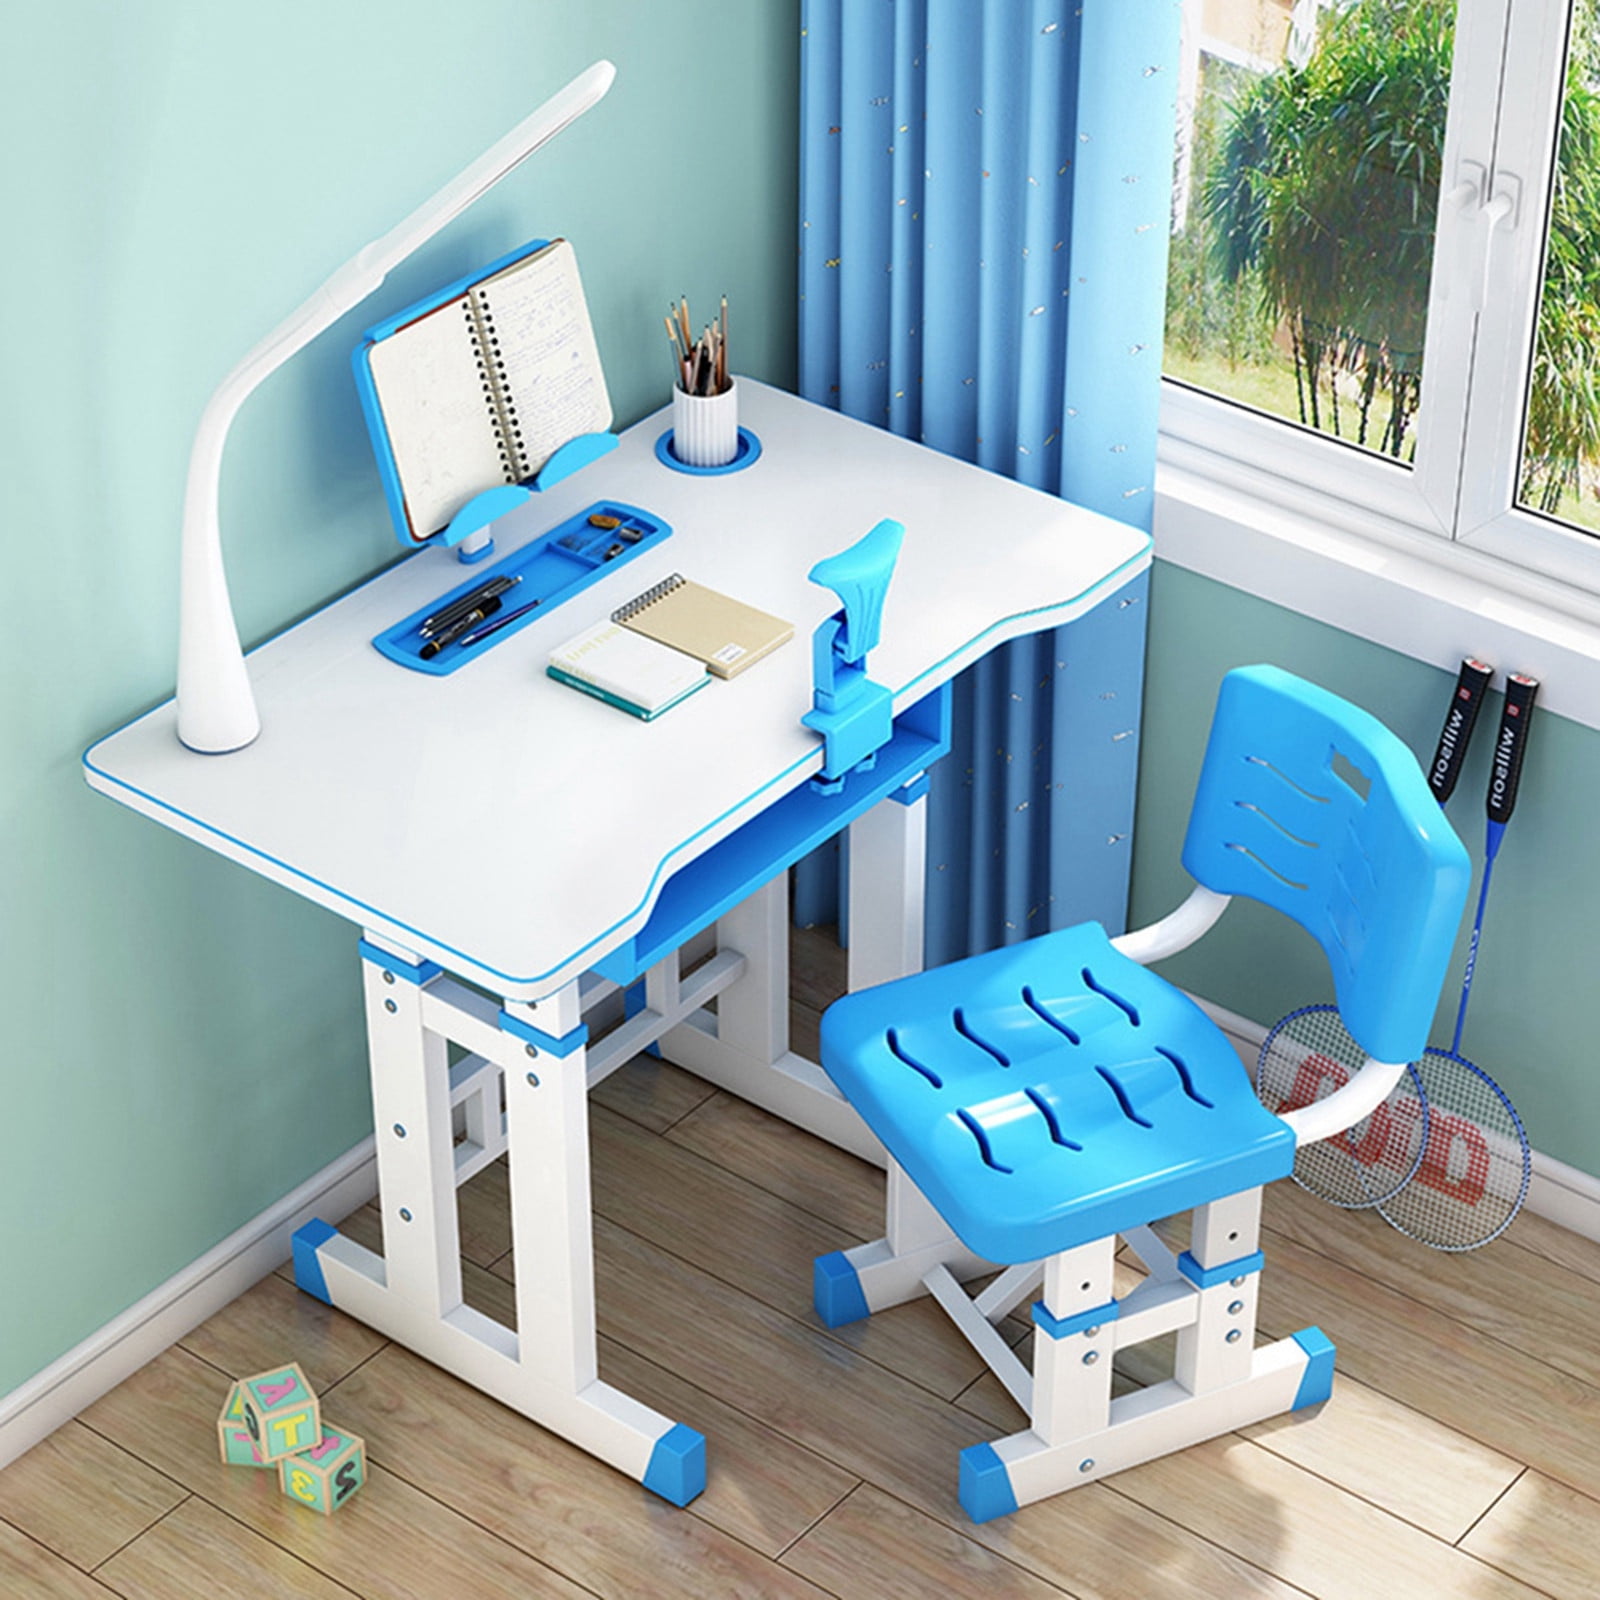 Height Adjustable Study Desk & Chair Set School Kids Student Home Table Boy Girl 